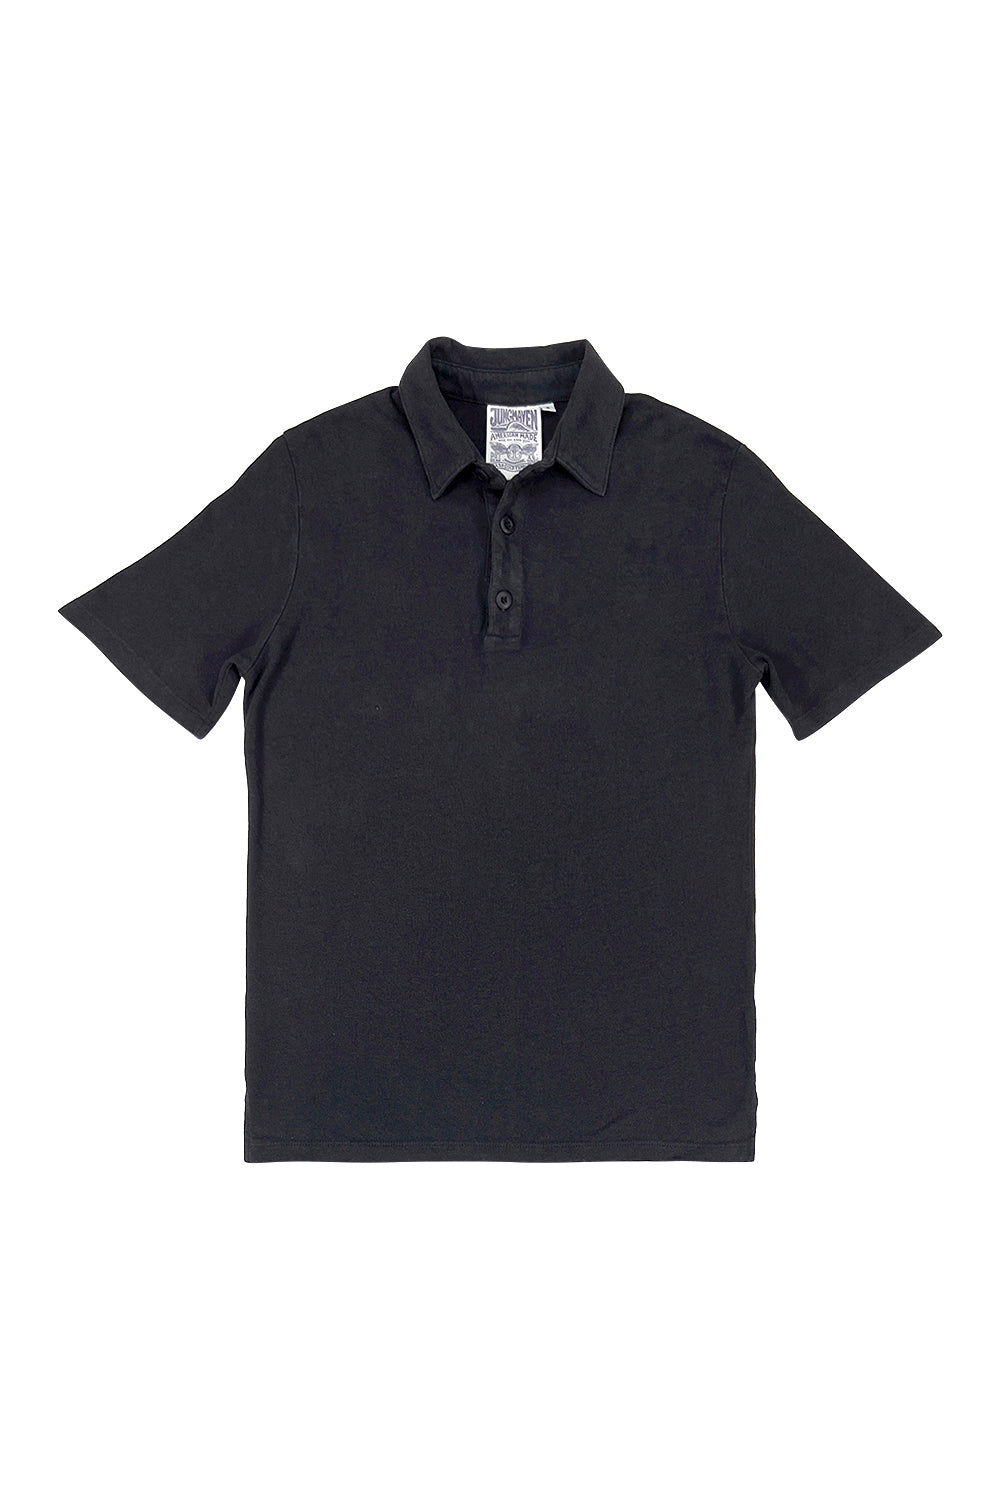 Preston Polo Shirt | Jungmaven Hemp Clothing & Accessories / Color: Black